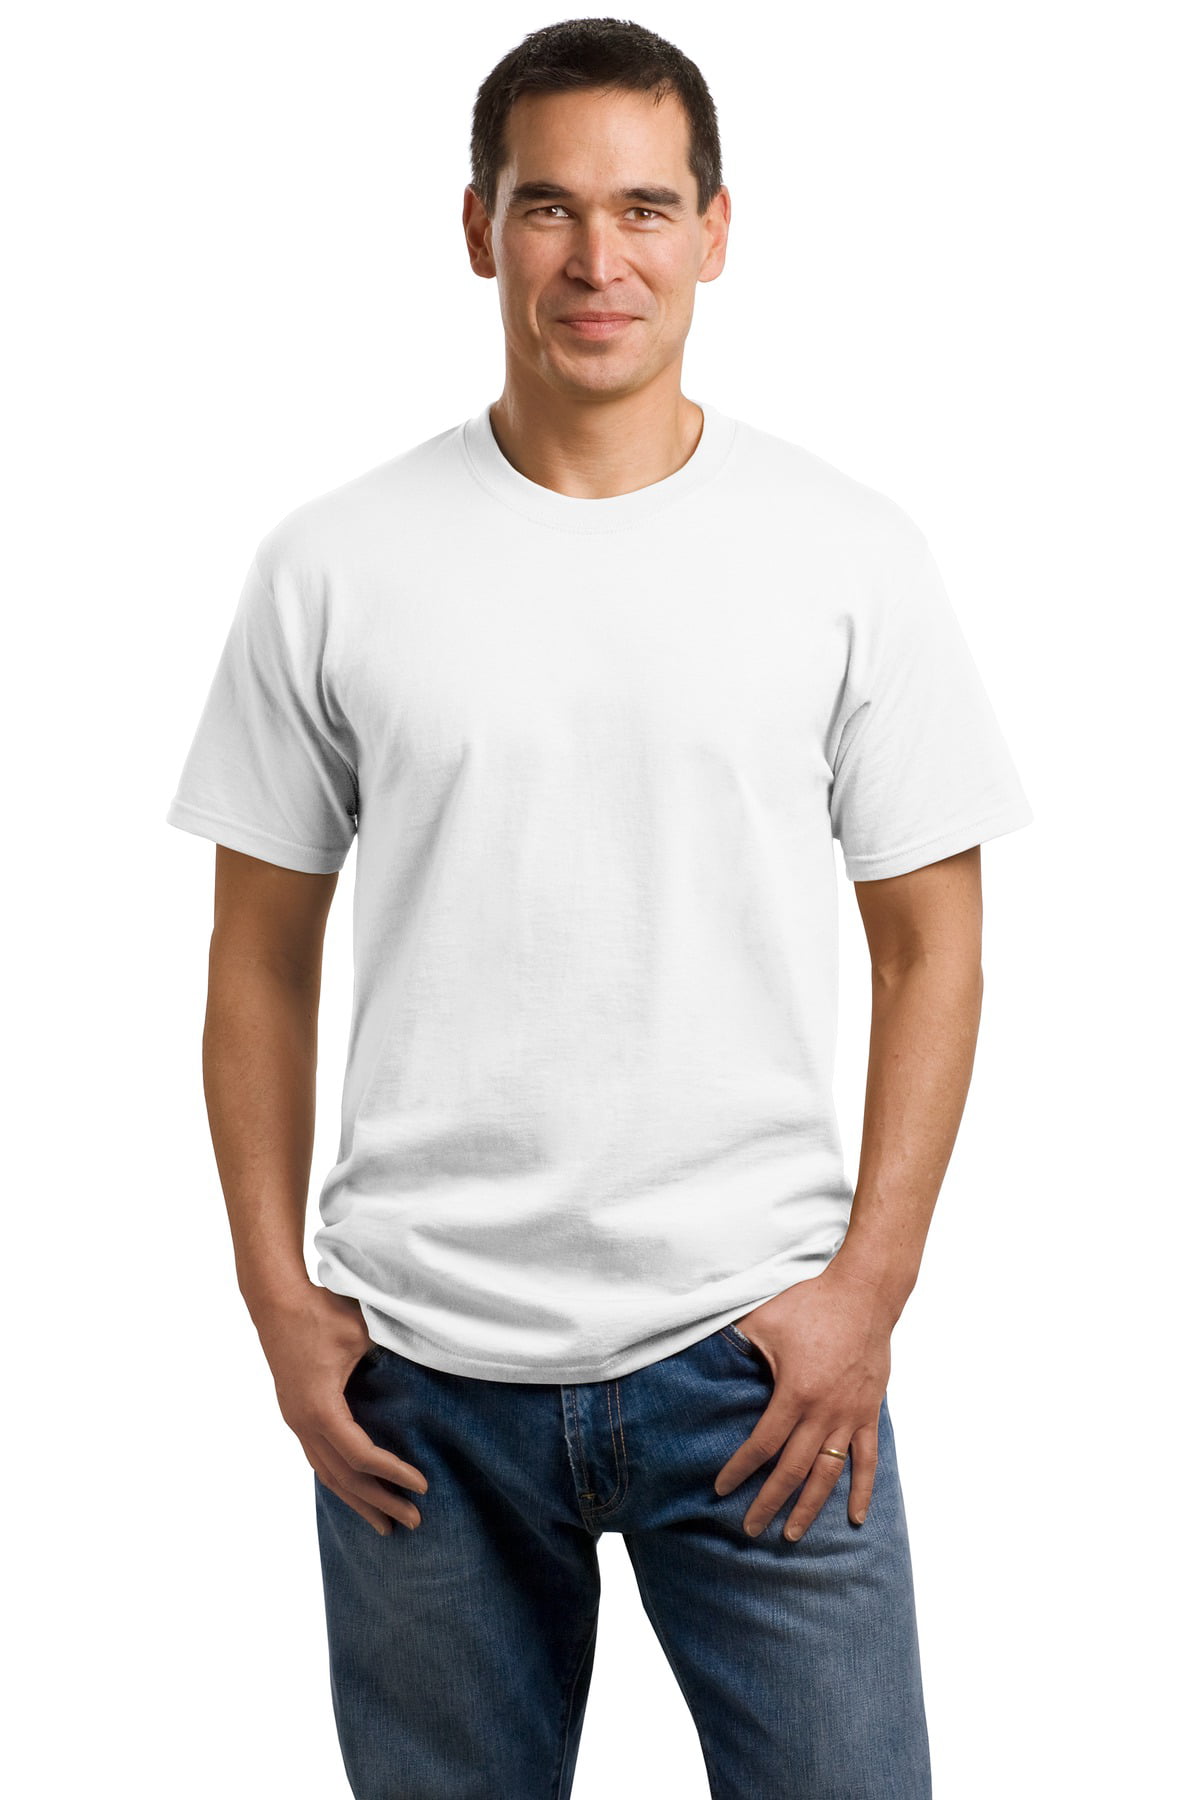 Port & Company 5.4-oz 100% Cotton Pocket T-Shirt 